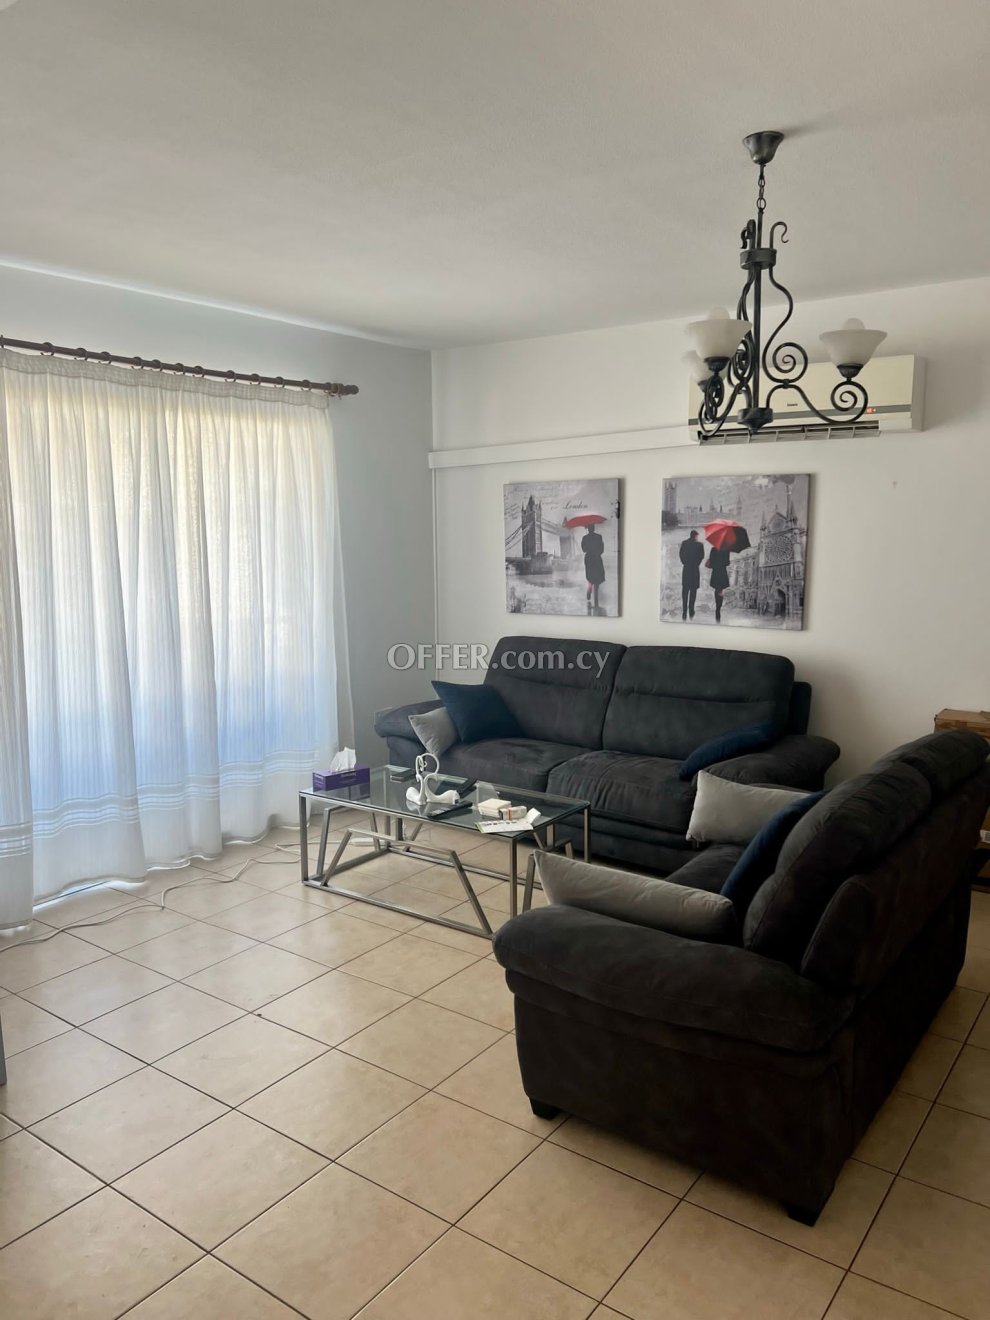 New For Sale €170,000 Apartment is a Studio, Larnaka (Center), Larnaca Larnaca - 1